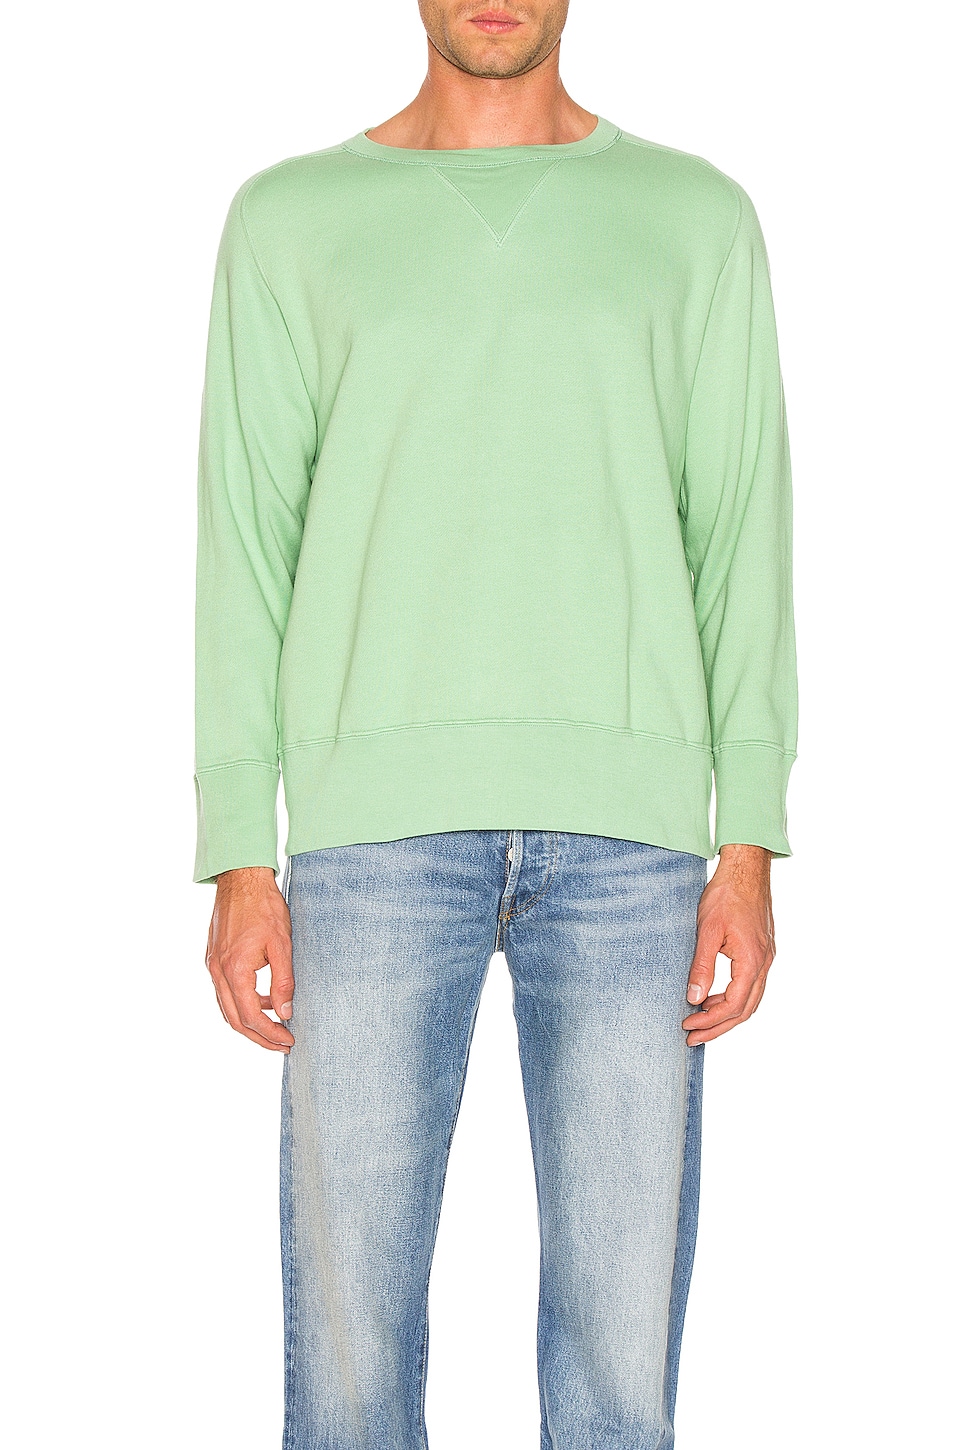 LEVI'S Vintage Clothing Bay Meadows Sweatshirt in Mint Green | REVOLVE